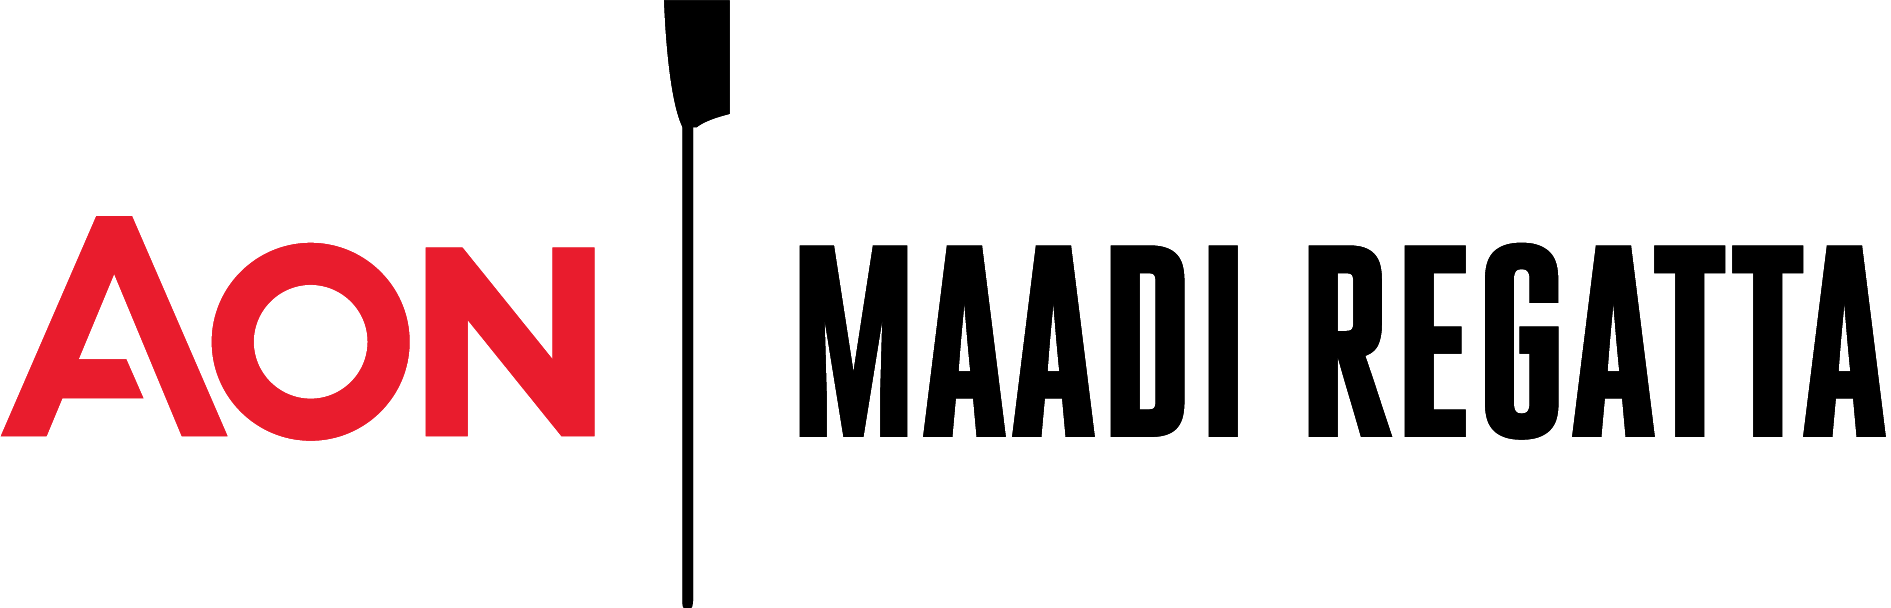 Maadi logo